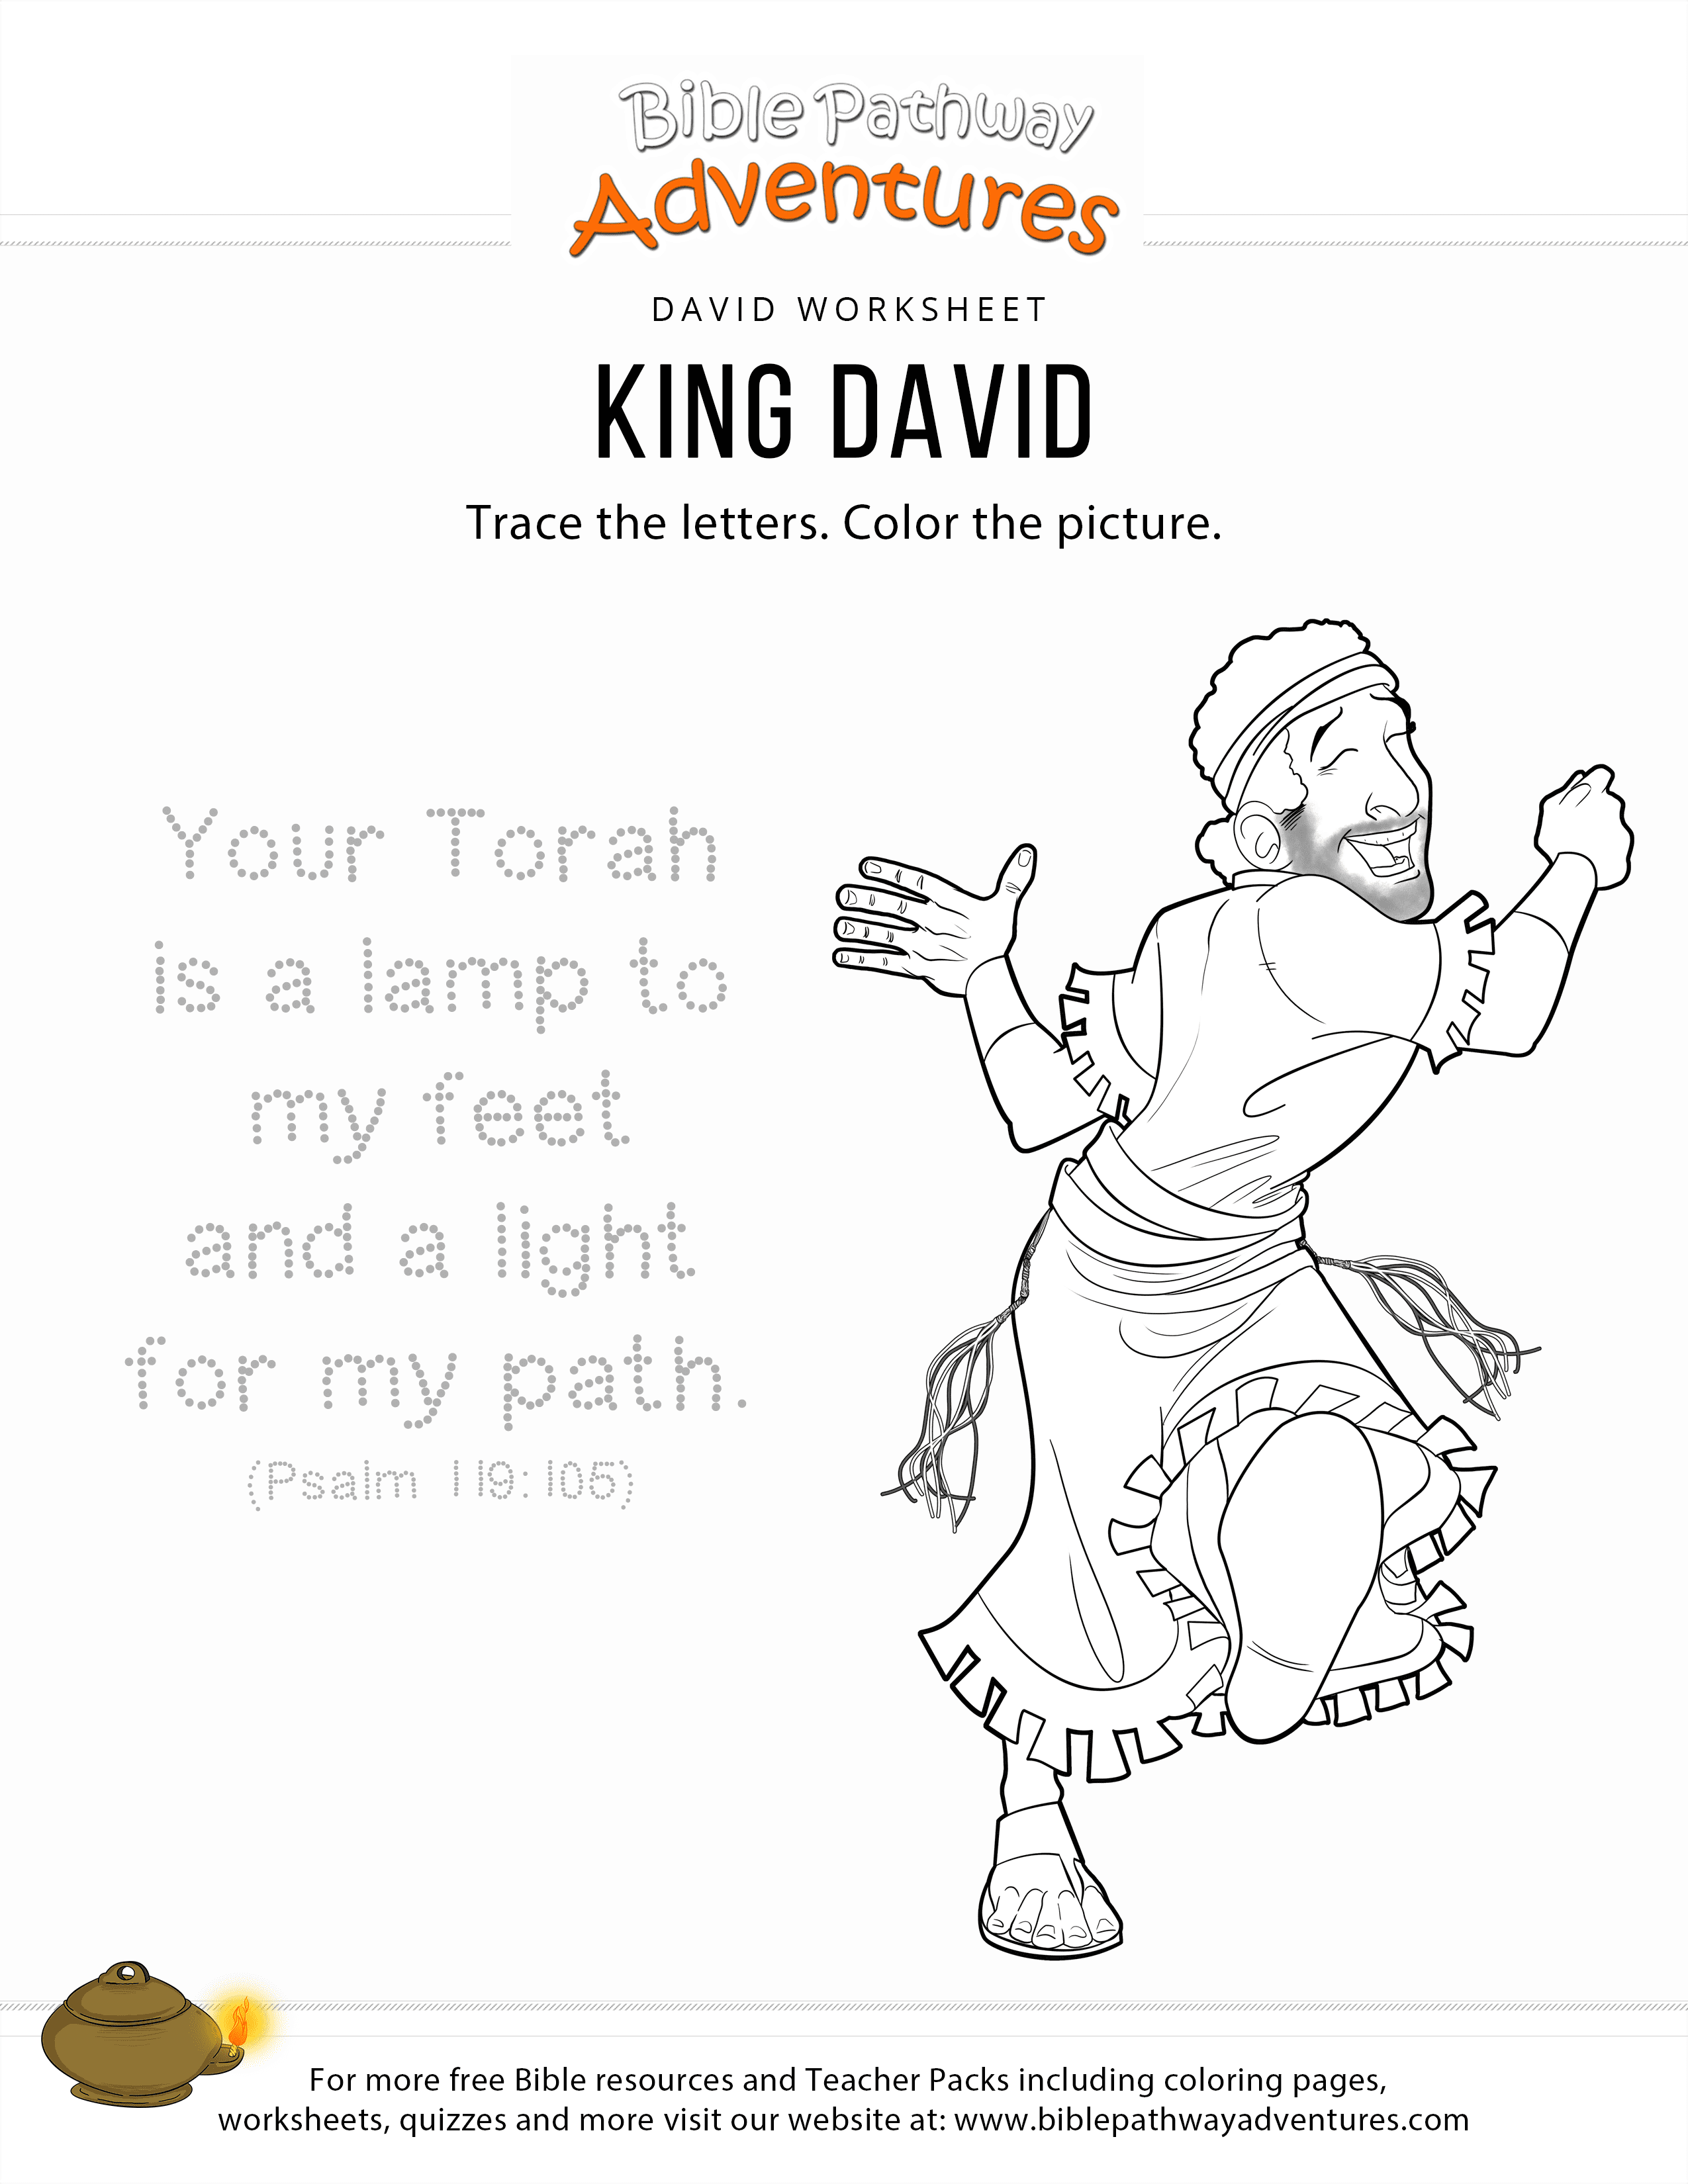 King david â bible pathway adventures